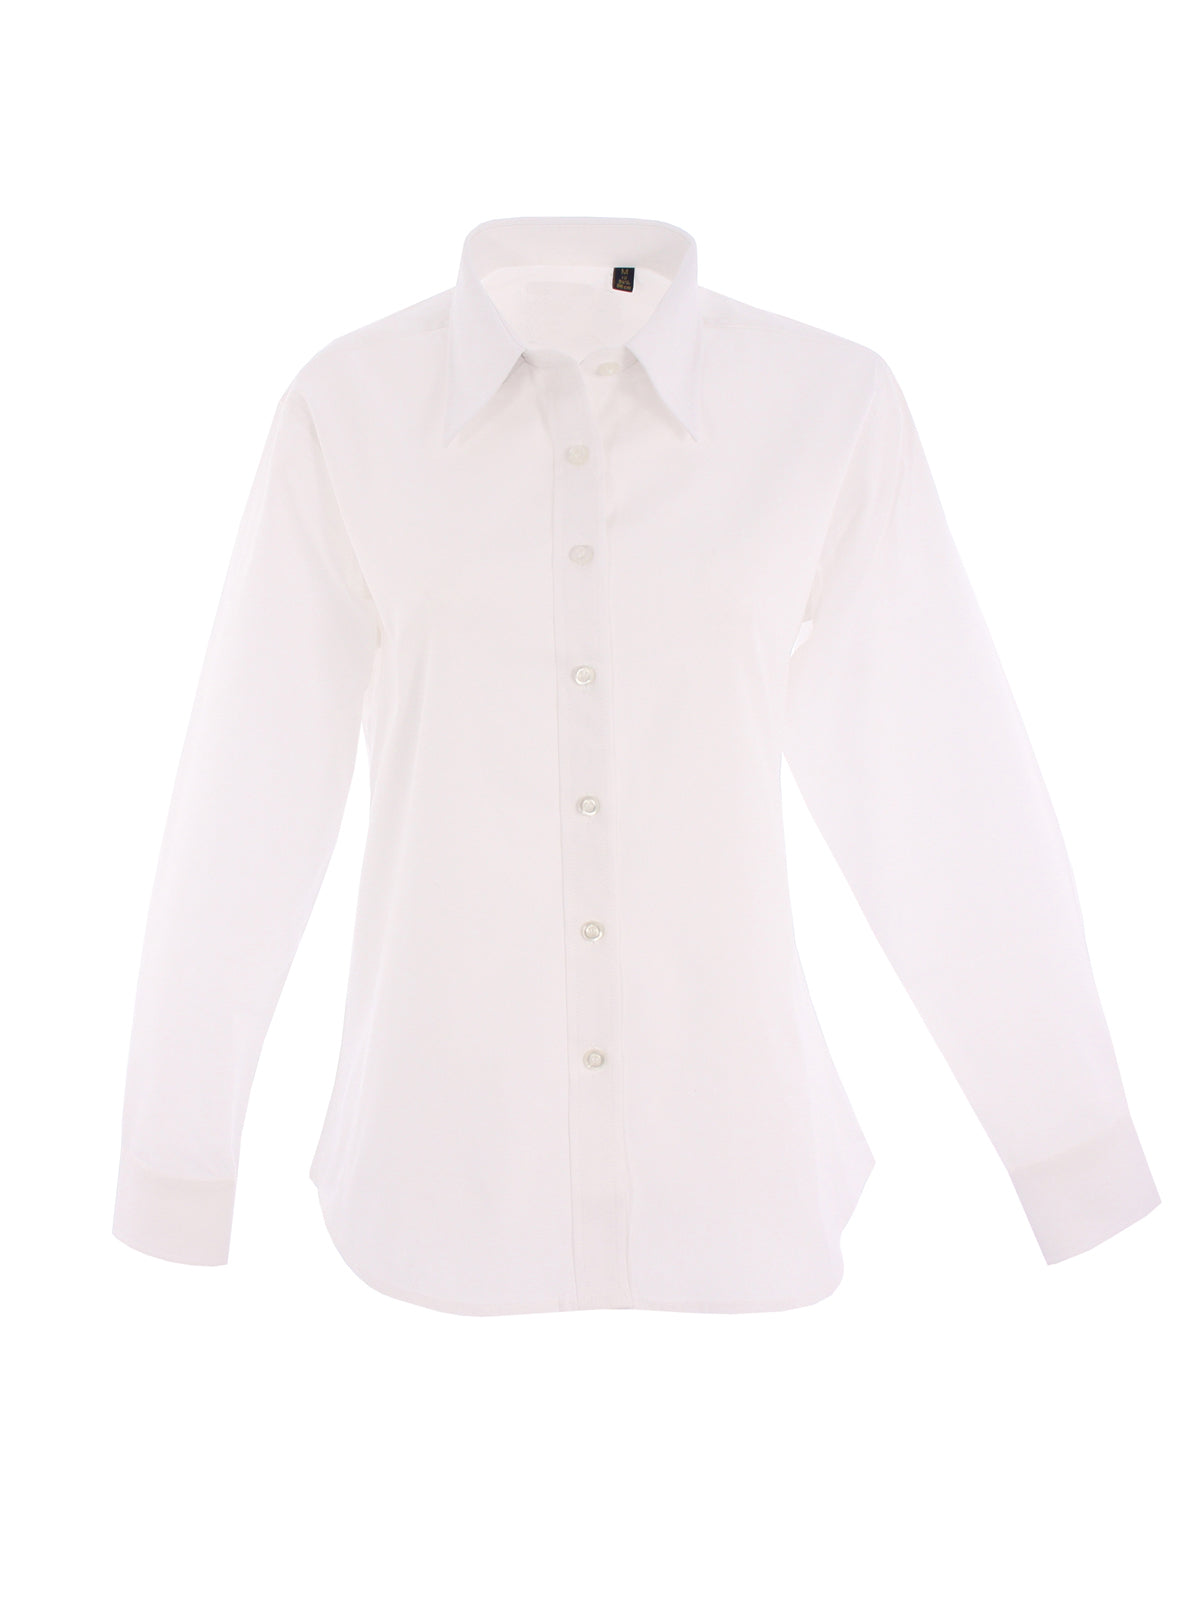 Uneek Ladies Pinpoint Oxford Full Sleeve Shirt UC703 - White